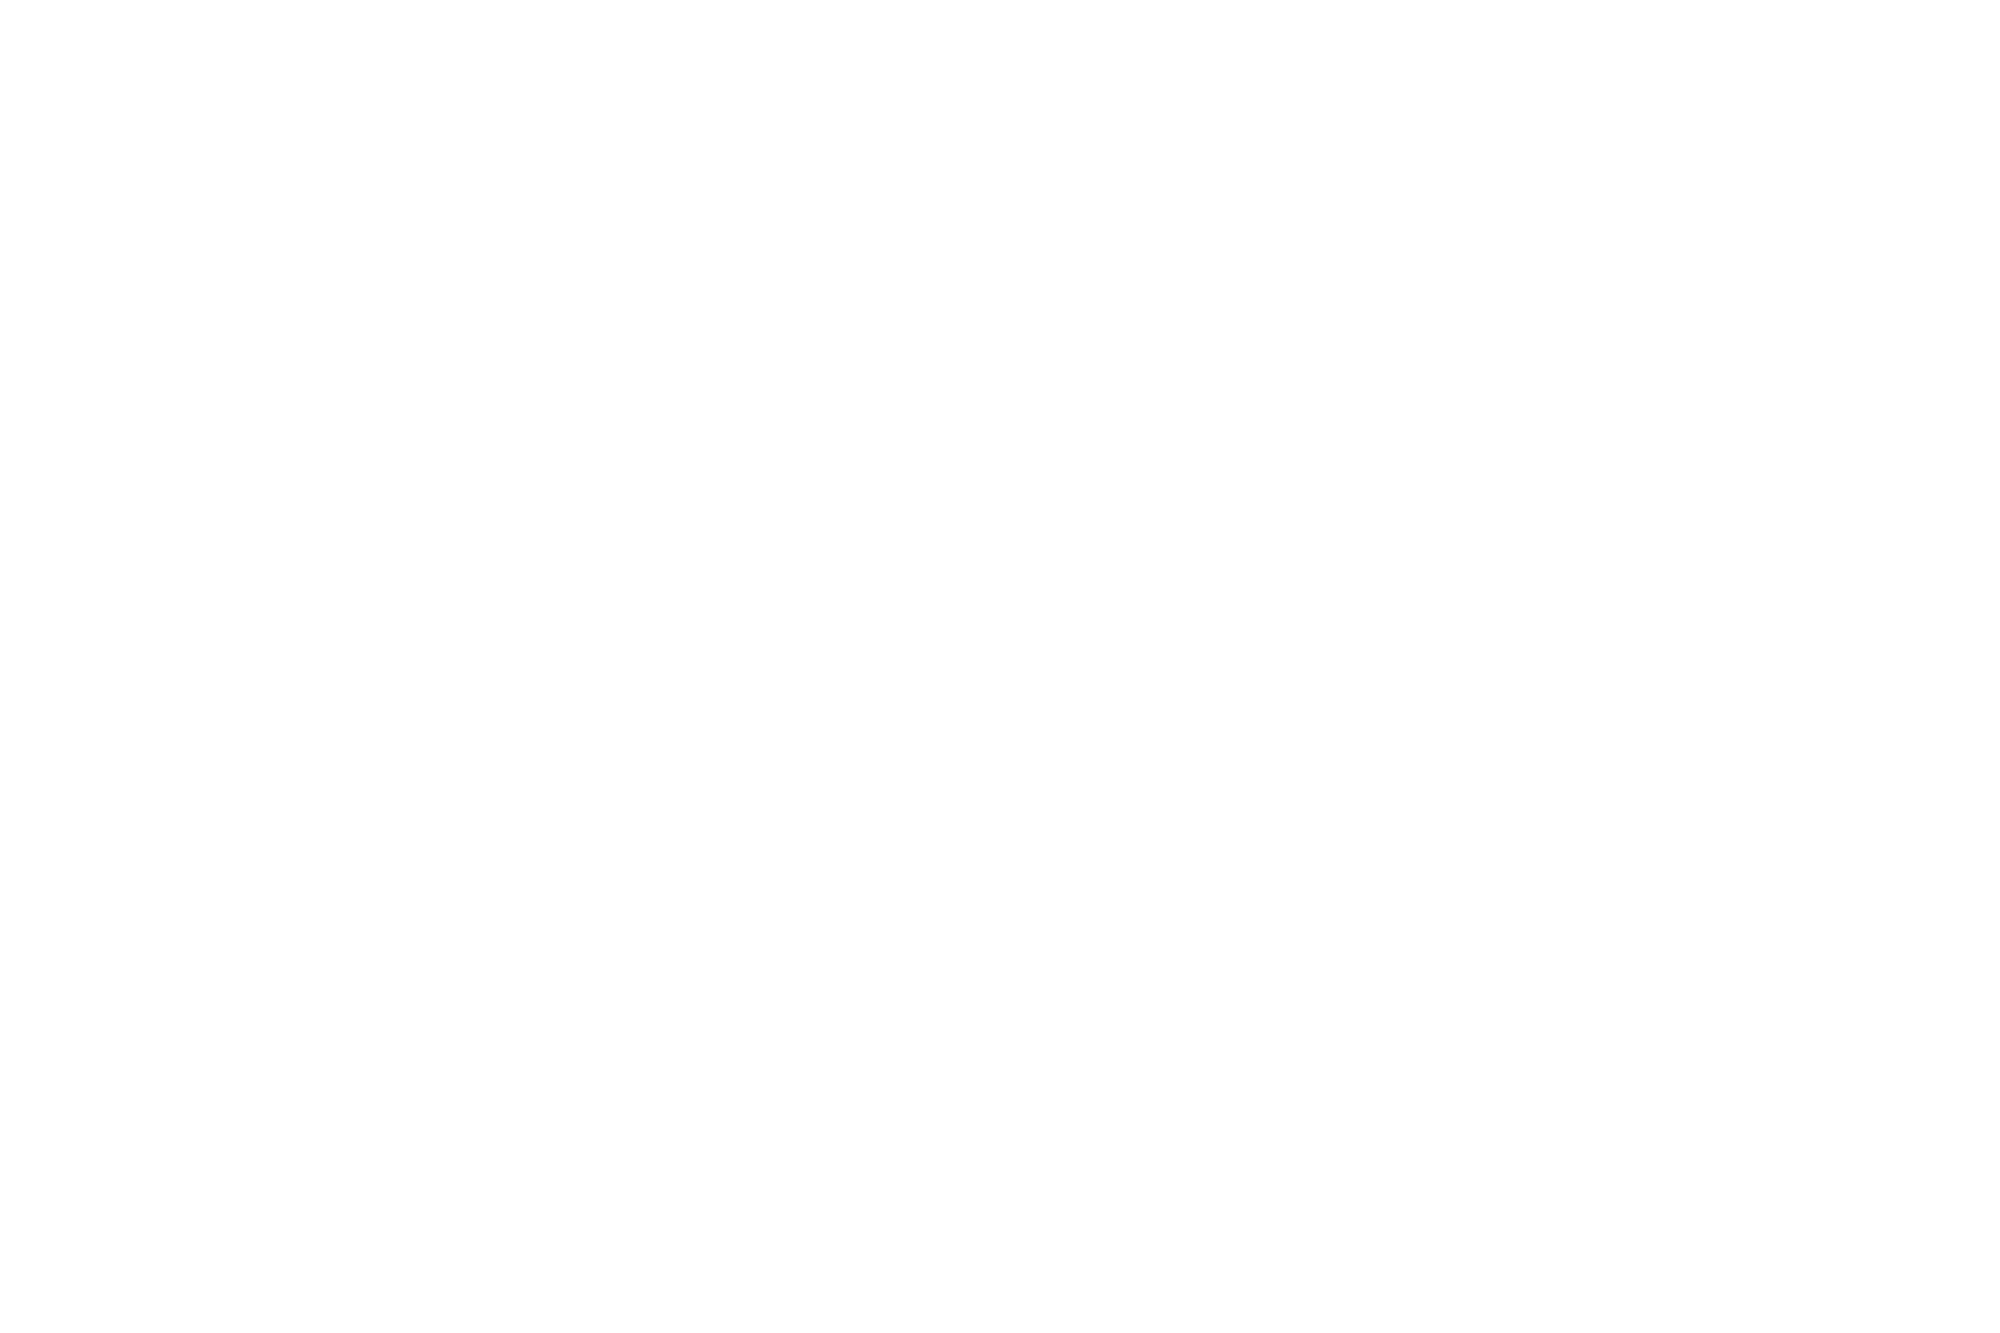 Danielle Levitt photography celebrity portrait of actress Viola Davis sitting on gold velvet chair under vibrant colorful neon light in retro home living room for Lâ€™Officiel Magazine cover story editorial